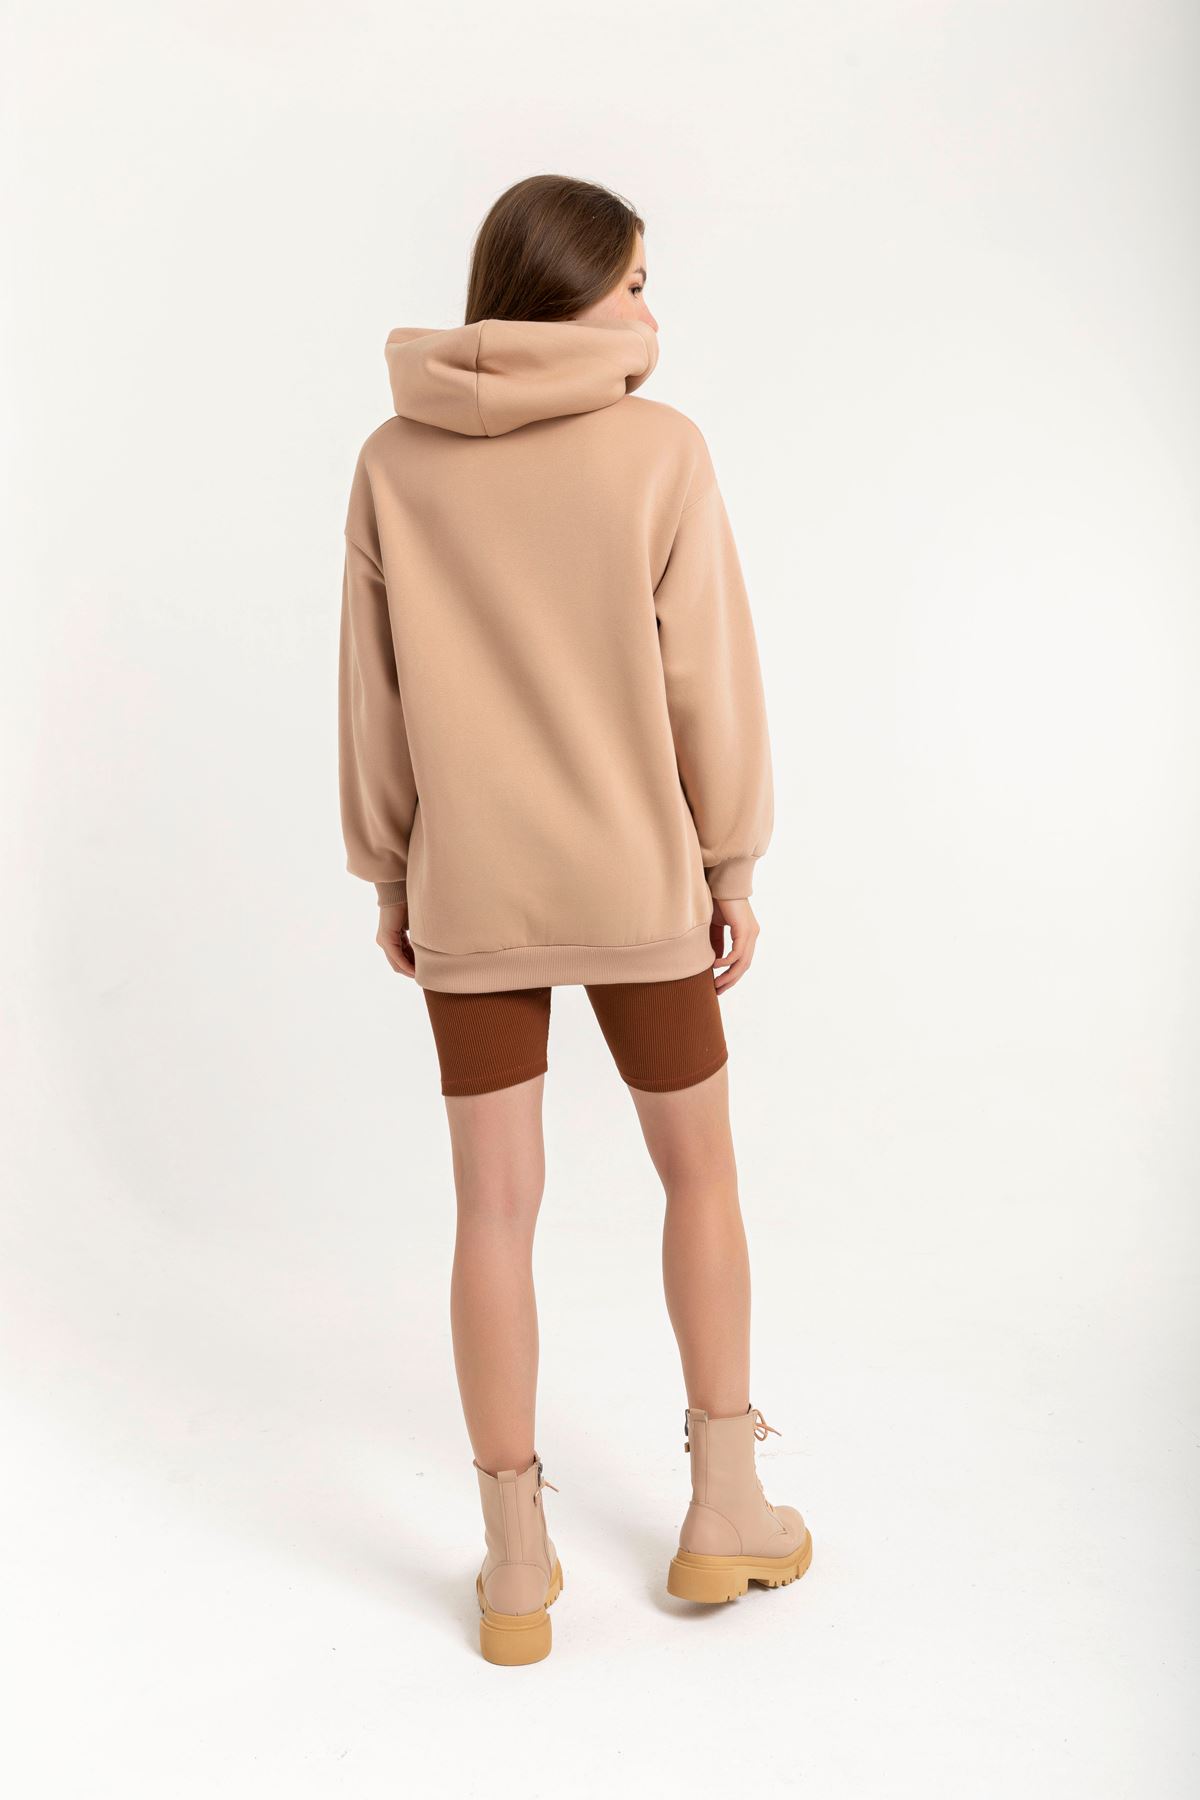 Jesica Fabric Long Sleeve Hooded Oversize Zip Women Sweatshirt - Beige 